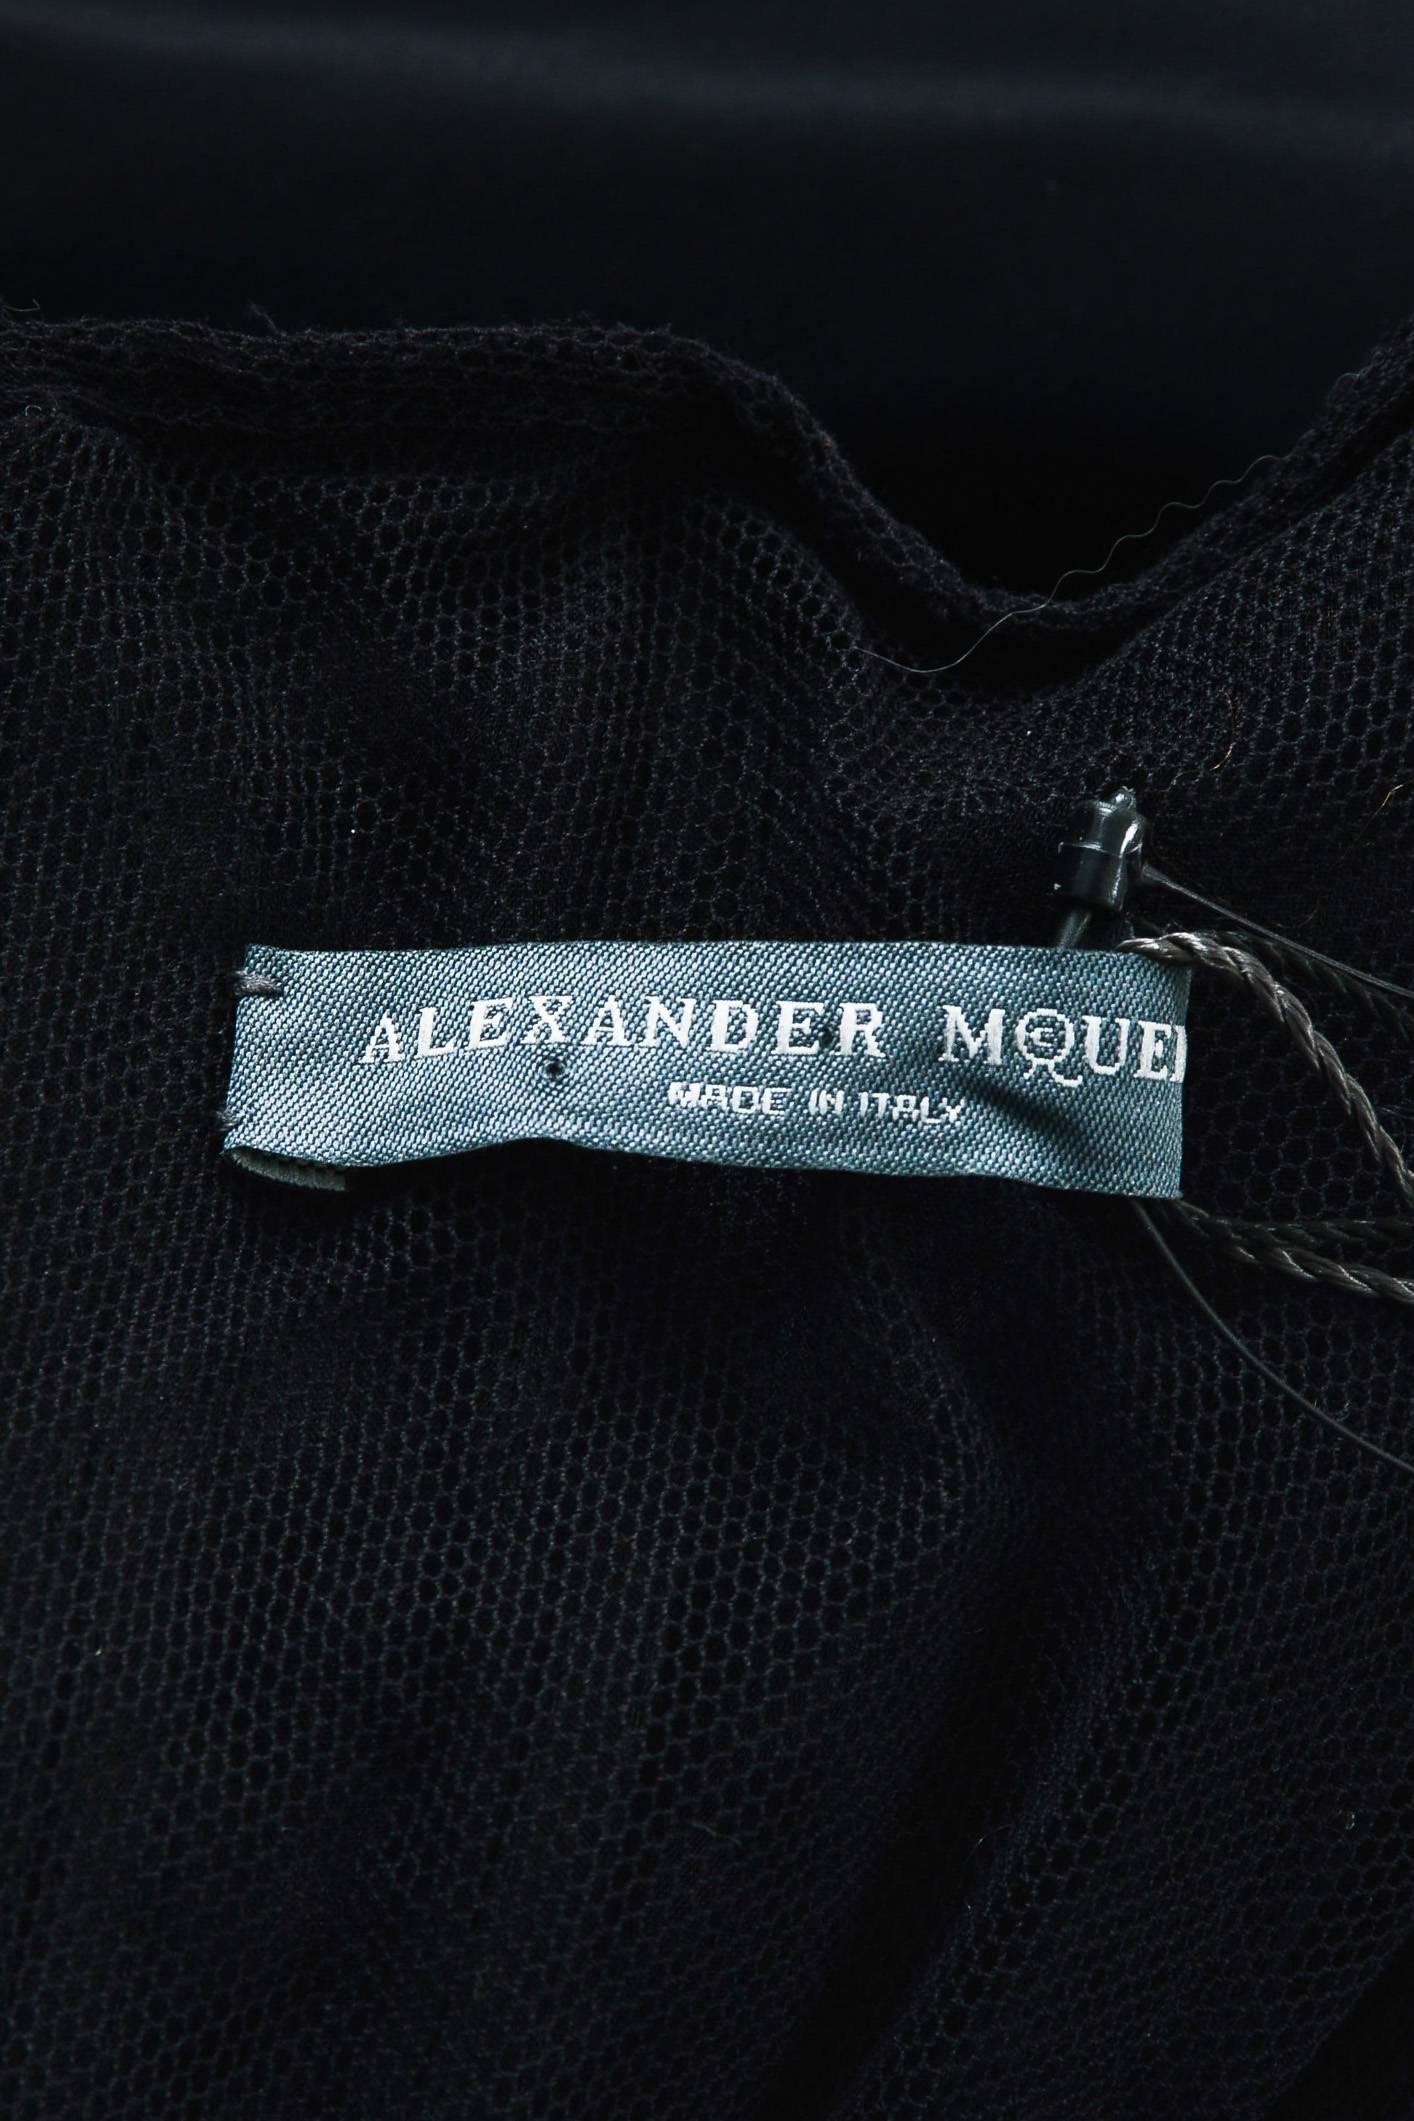 Alexander McQueen SS11 Runway Black Cream Silk Ombre Ruched Dress Gown SZ 44 For Sale 1